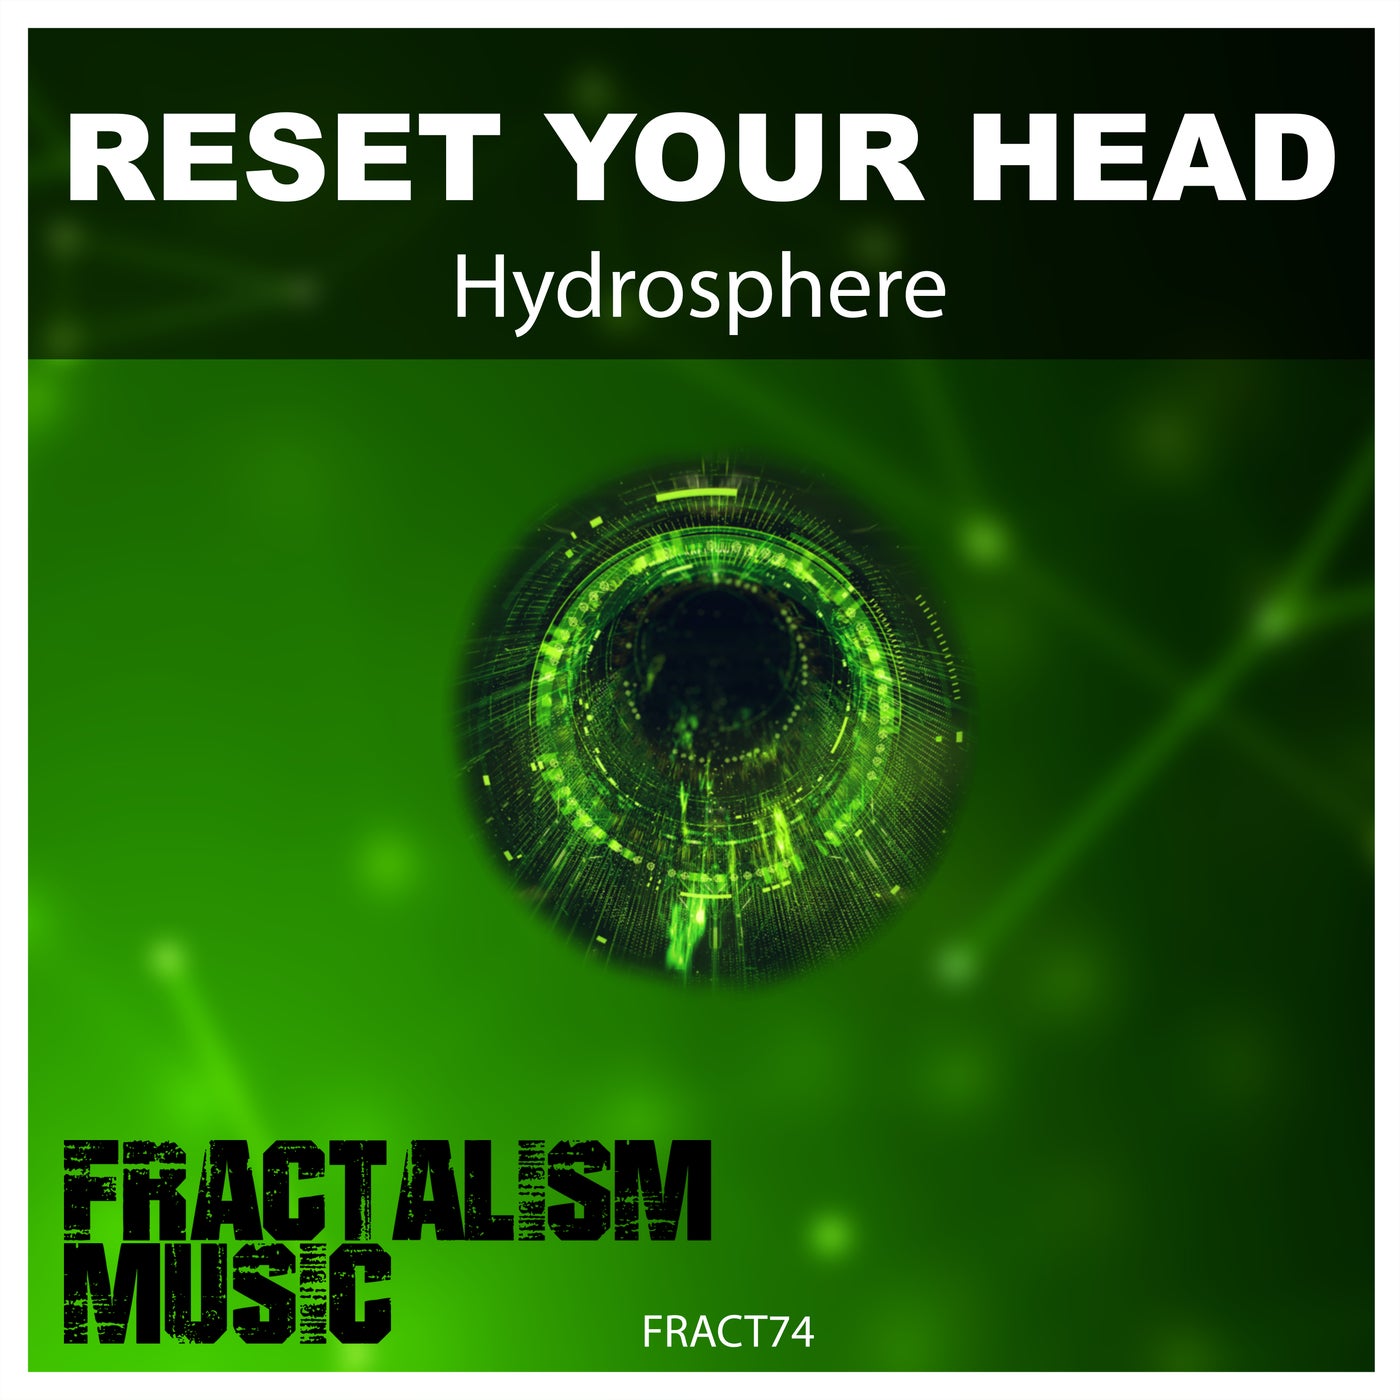 Reset Your Head